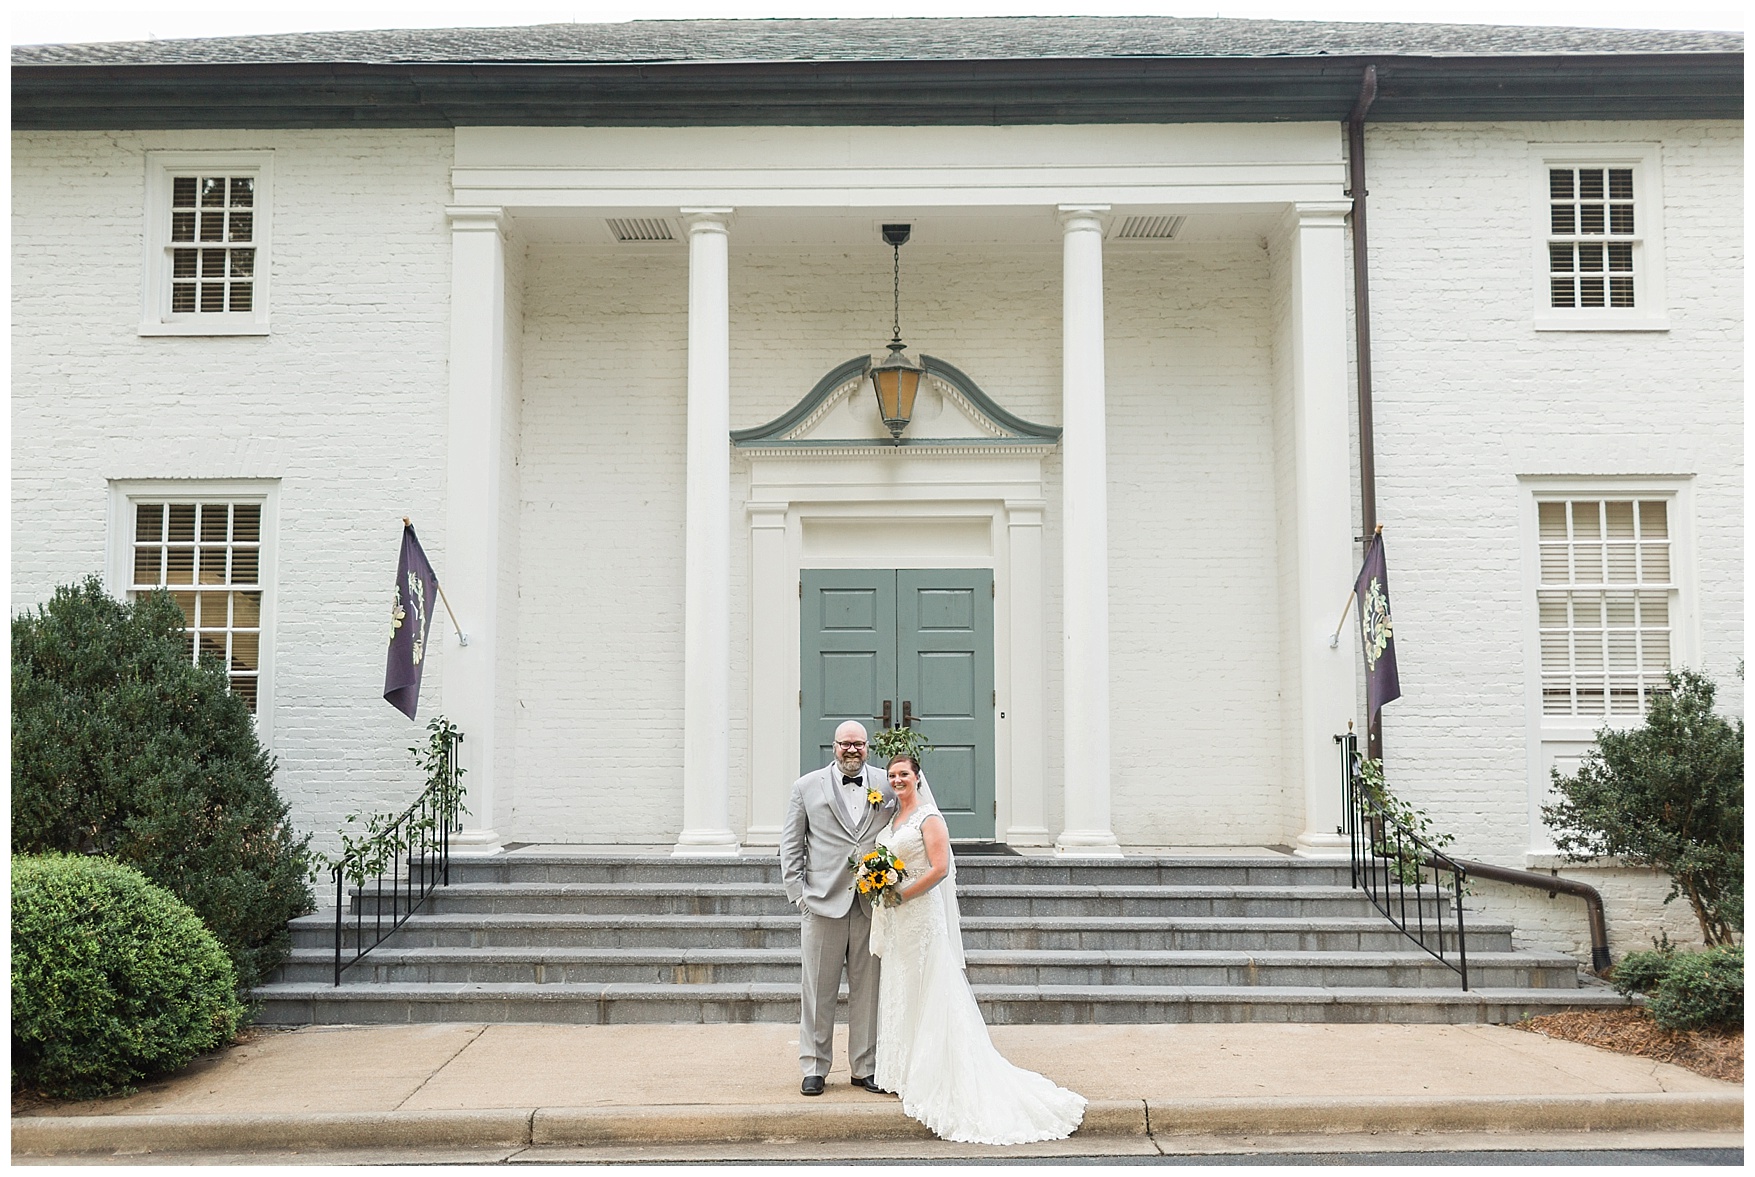 Danville Golf Club Wedding || Danville, Lynchburg, and Charlottesville Wedding Photographer || Fall Wedding in Central Virginia || www.ashleyeiban.com